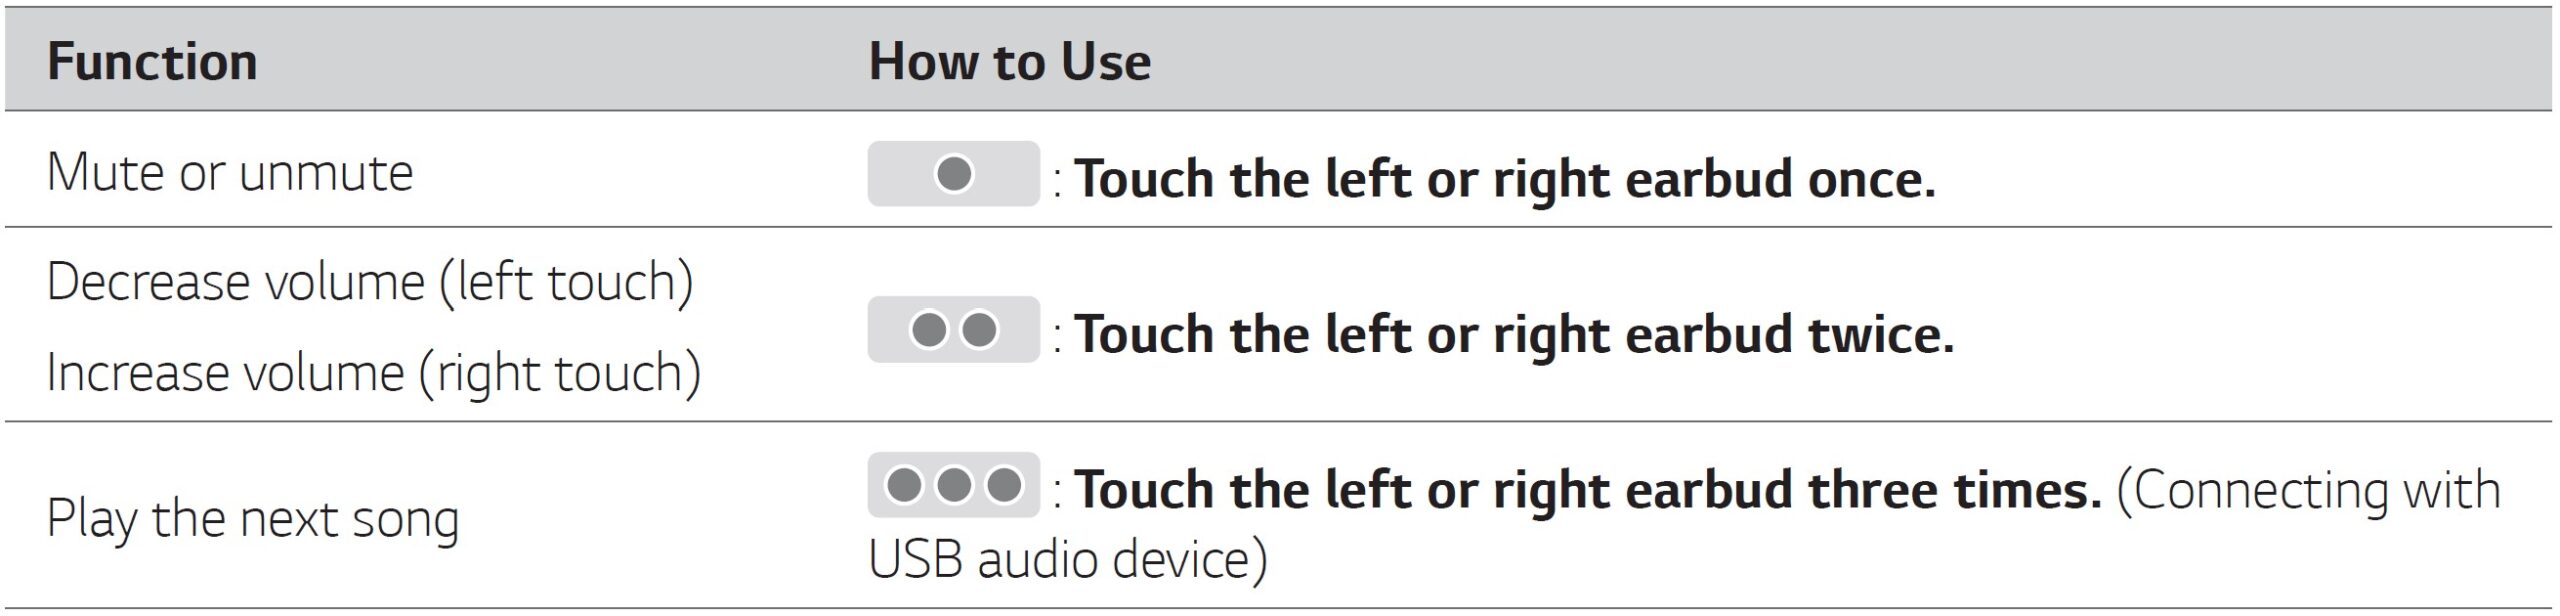 LG-Tone-Free-T90-Wireless-Bluetooth-Earbuds-User-Manual-19